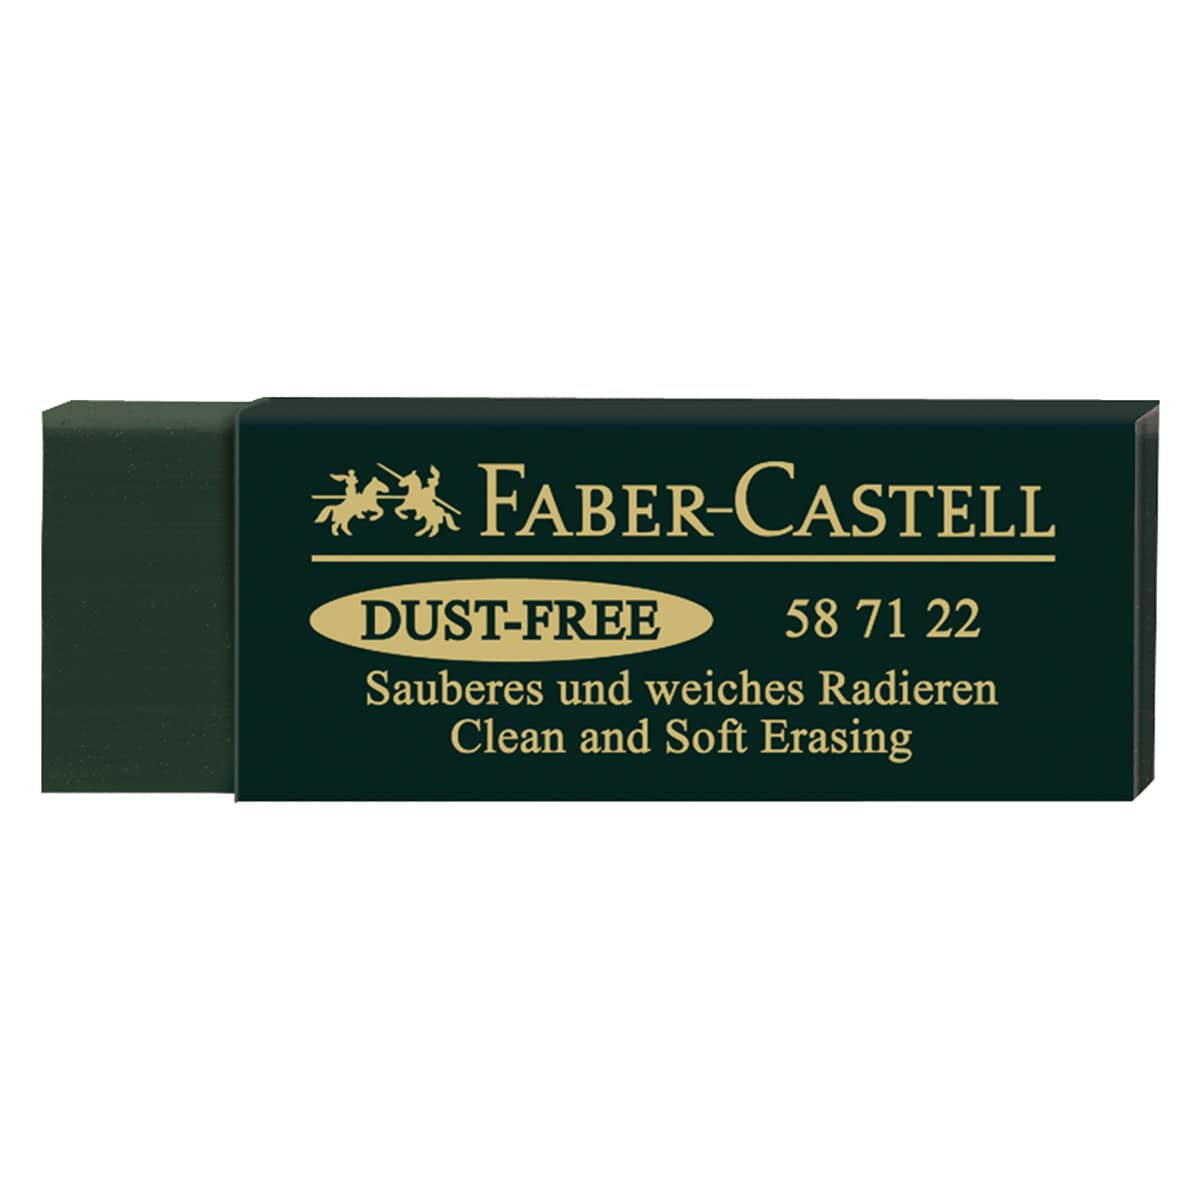 Faber-Castell Dust-Free Eraser - Green